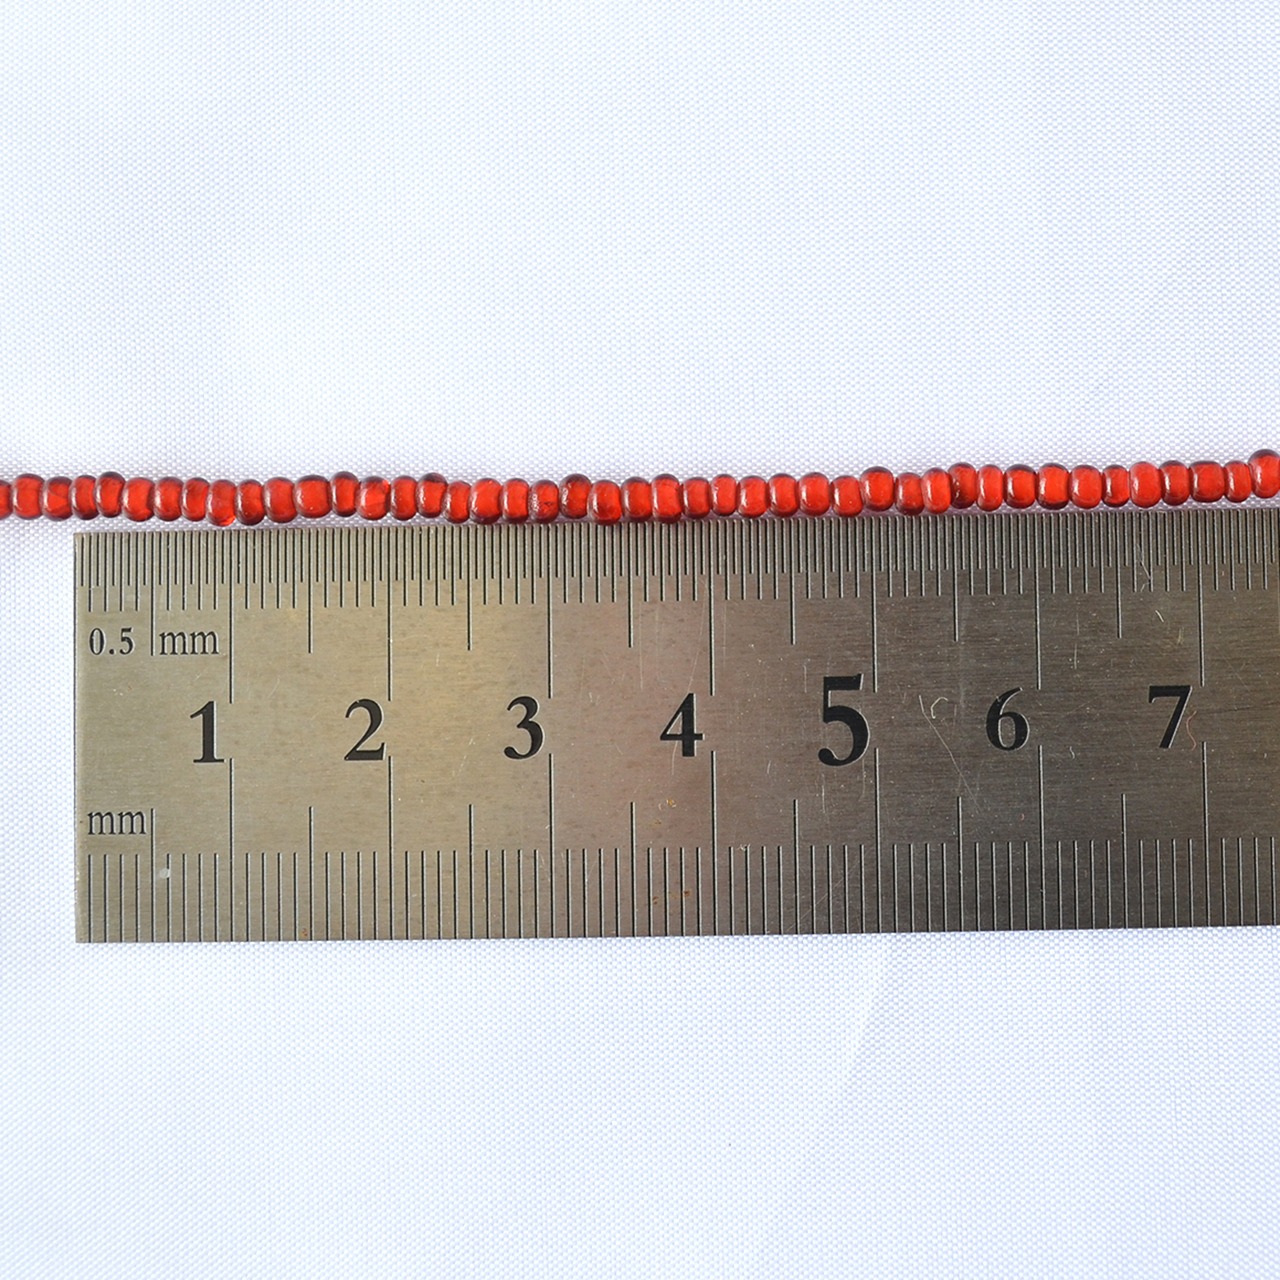 Mandi/マンディ Small A. Beads Necklace(60cm)(Red)